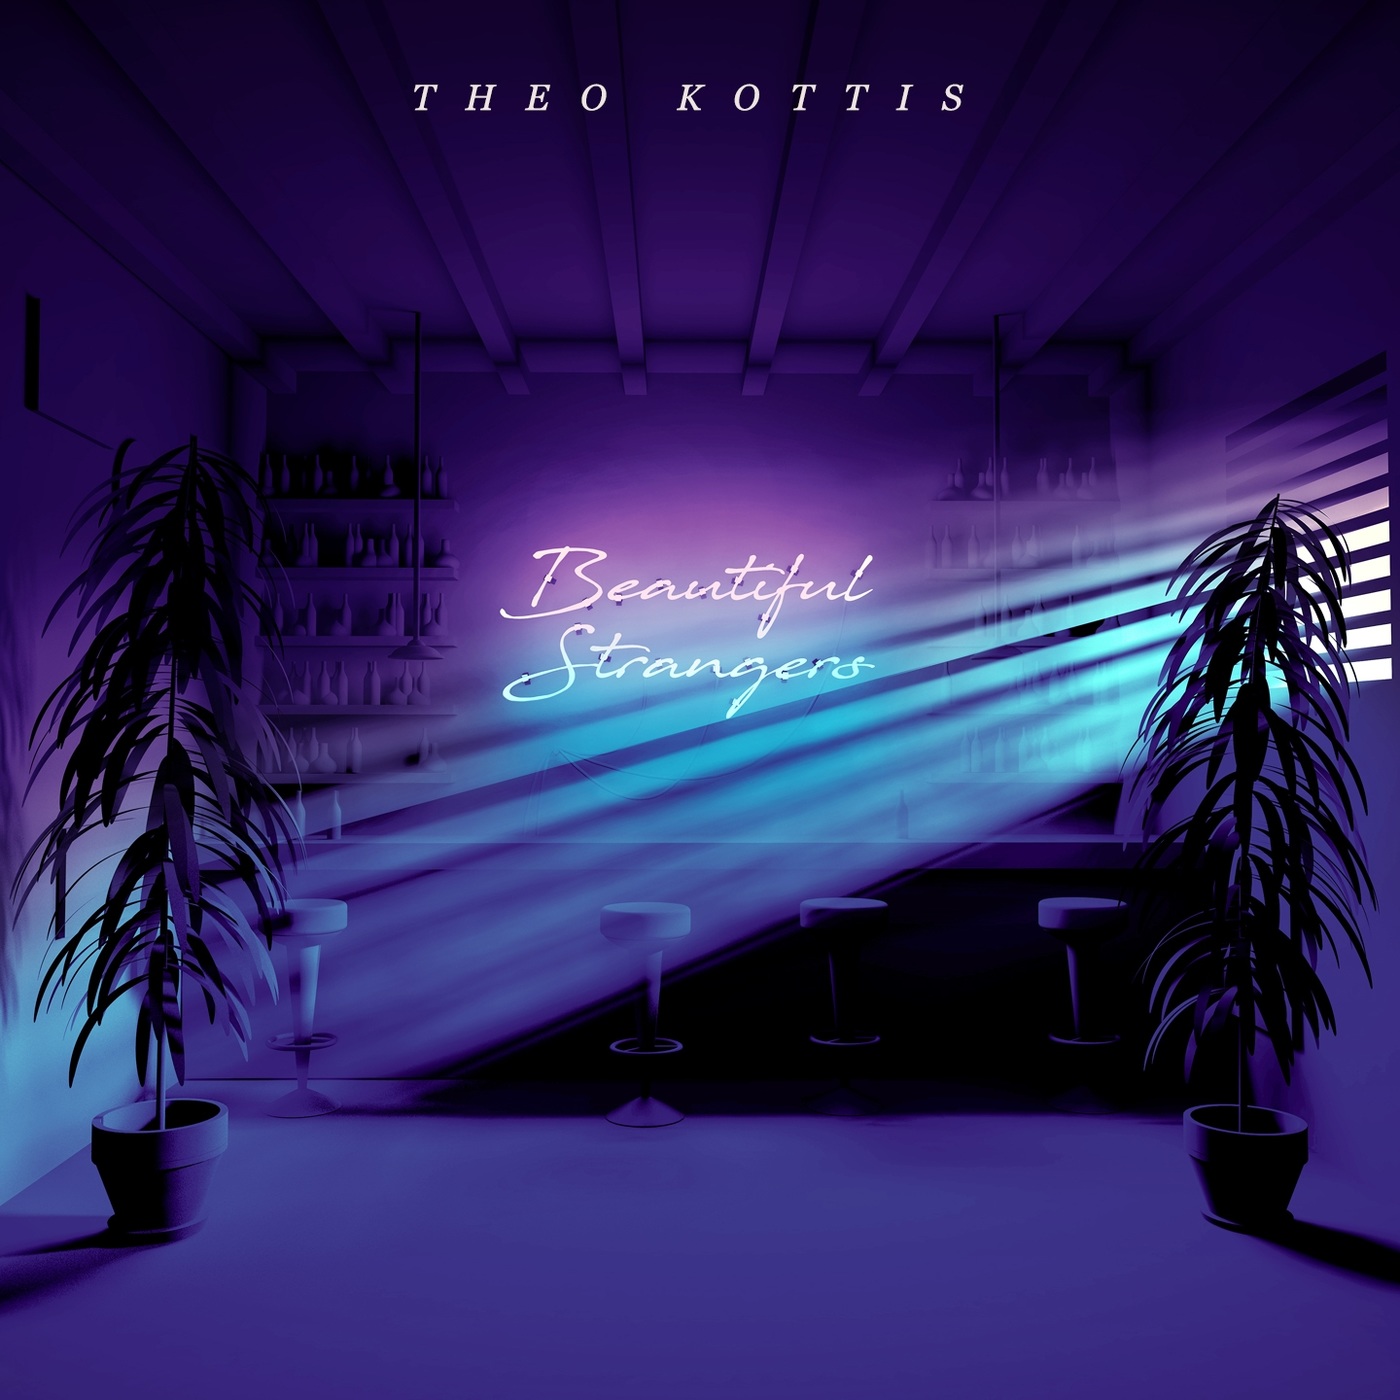 Theo Kottis - Beautiful Strangers / Beautiful Strangers